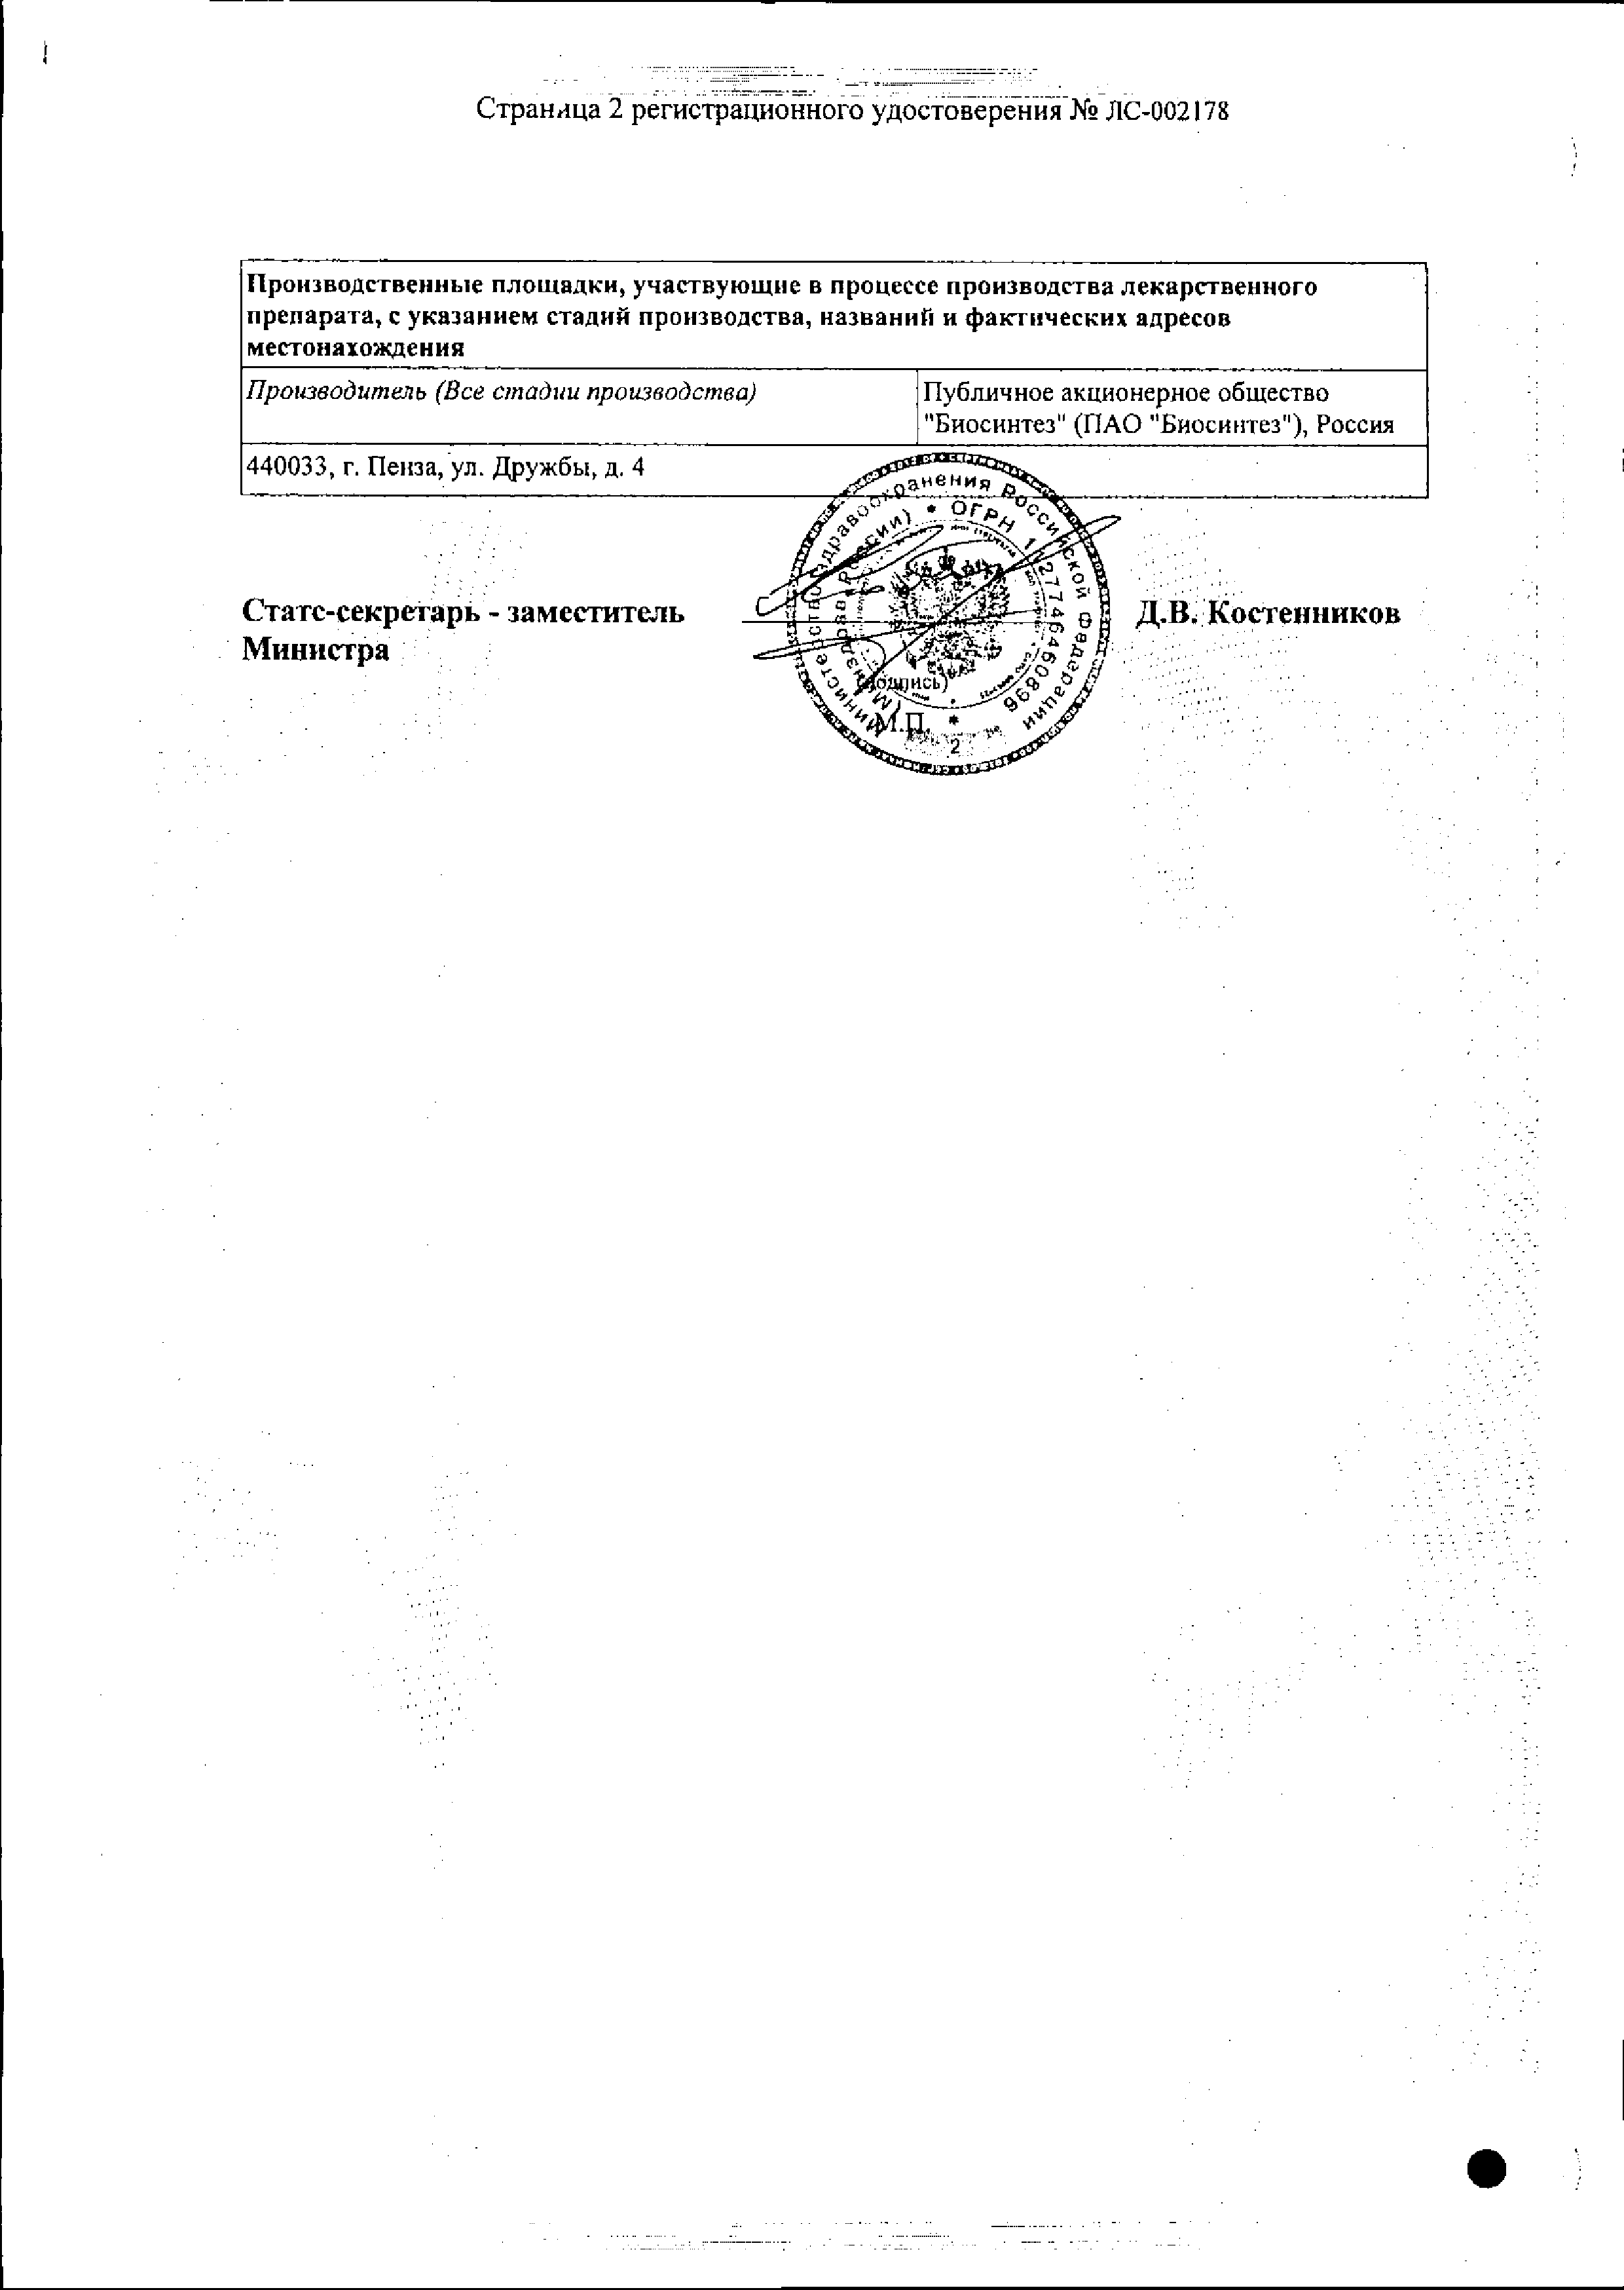 Тетрациклин (мазь) сертификат